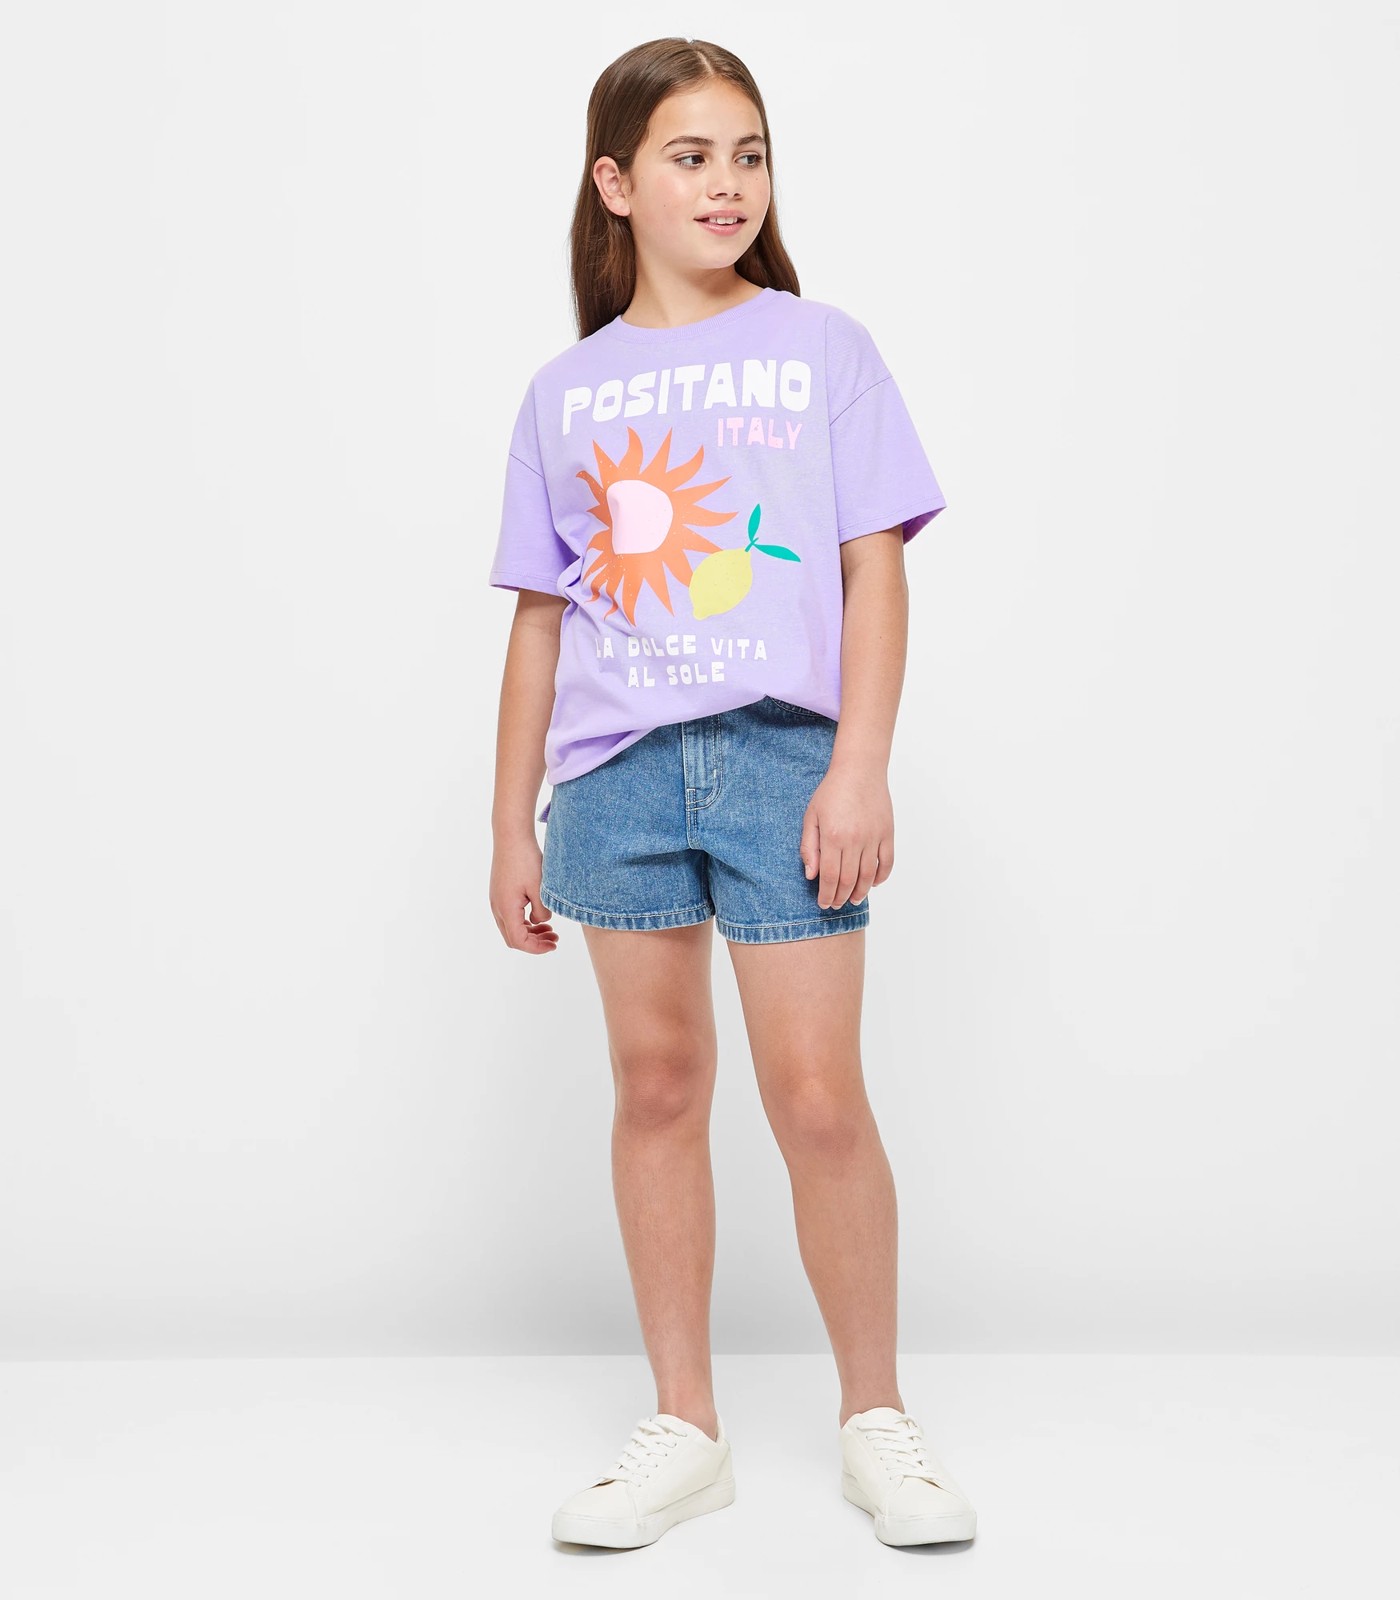 Positano Graphic Longline T-shirt | Target Australia